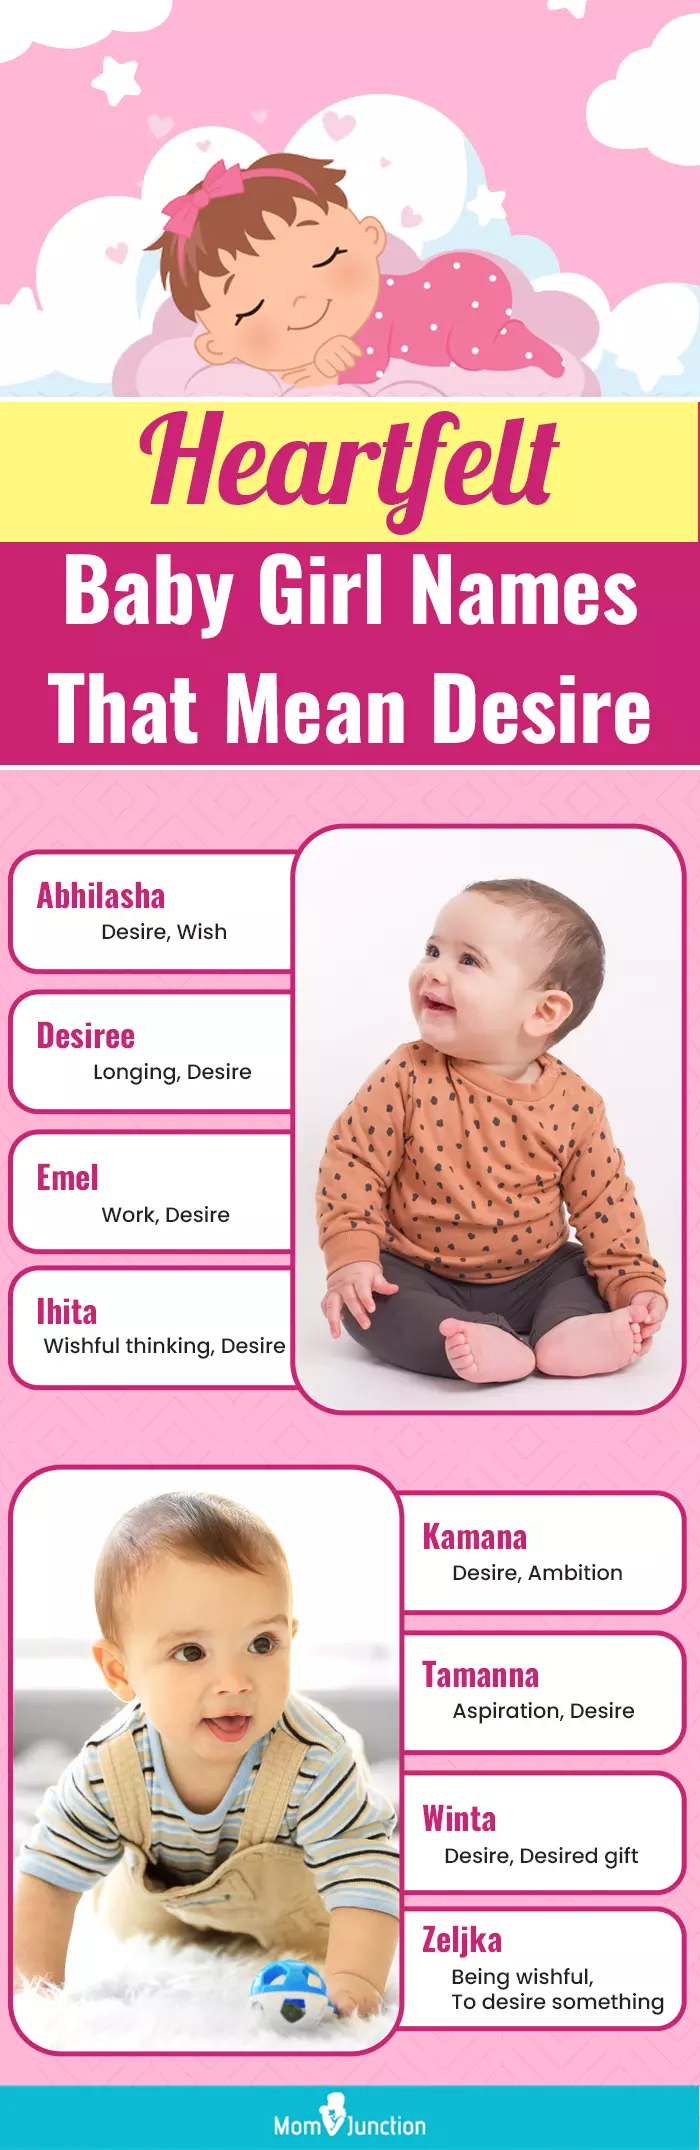 heartfelt baby girl names that mean desire (infographic)